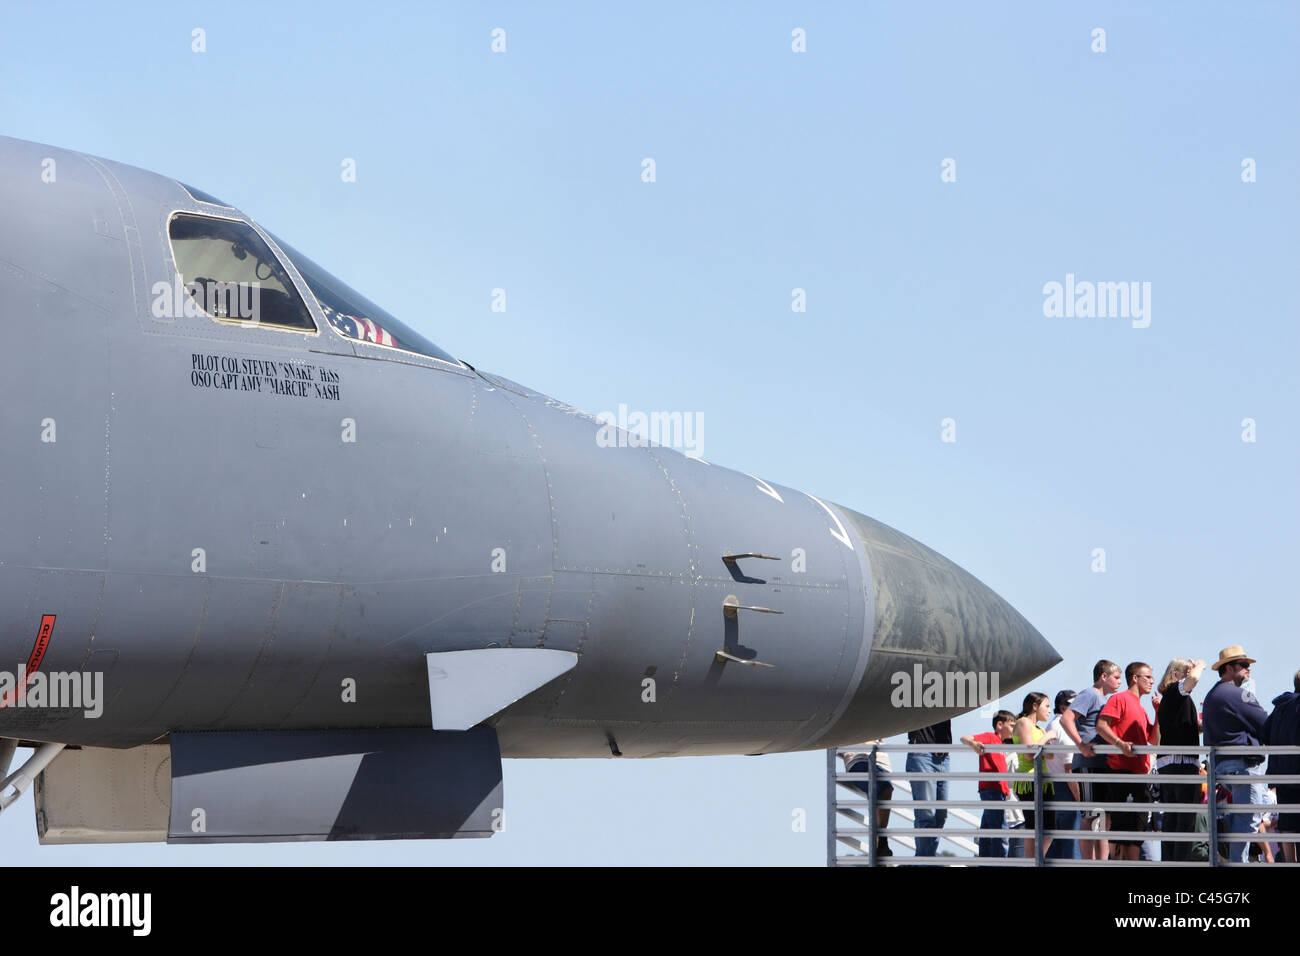 A U.S. Air Force B-1 Bomber looms over spectators at an air show, Seymour Johnson Air Force Base, Goldsboro, North Carolina, USA Stock Photo